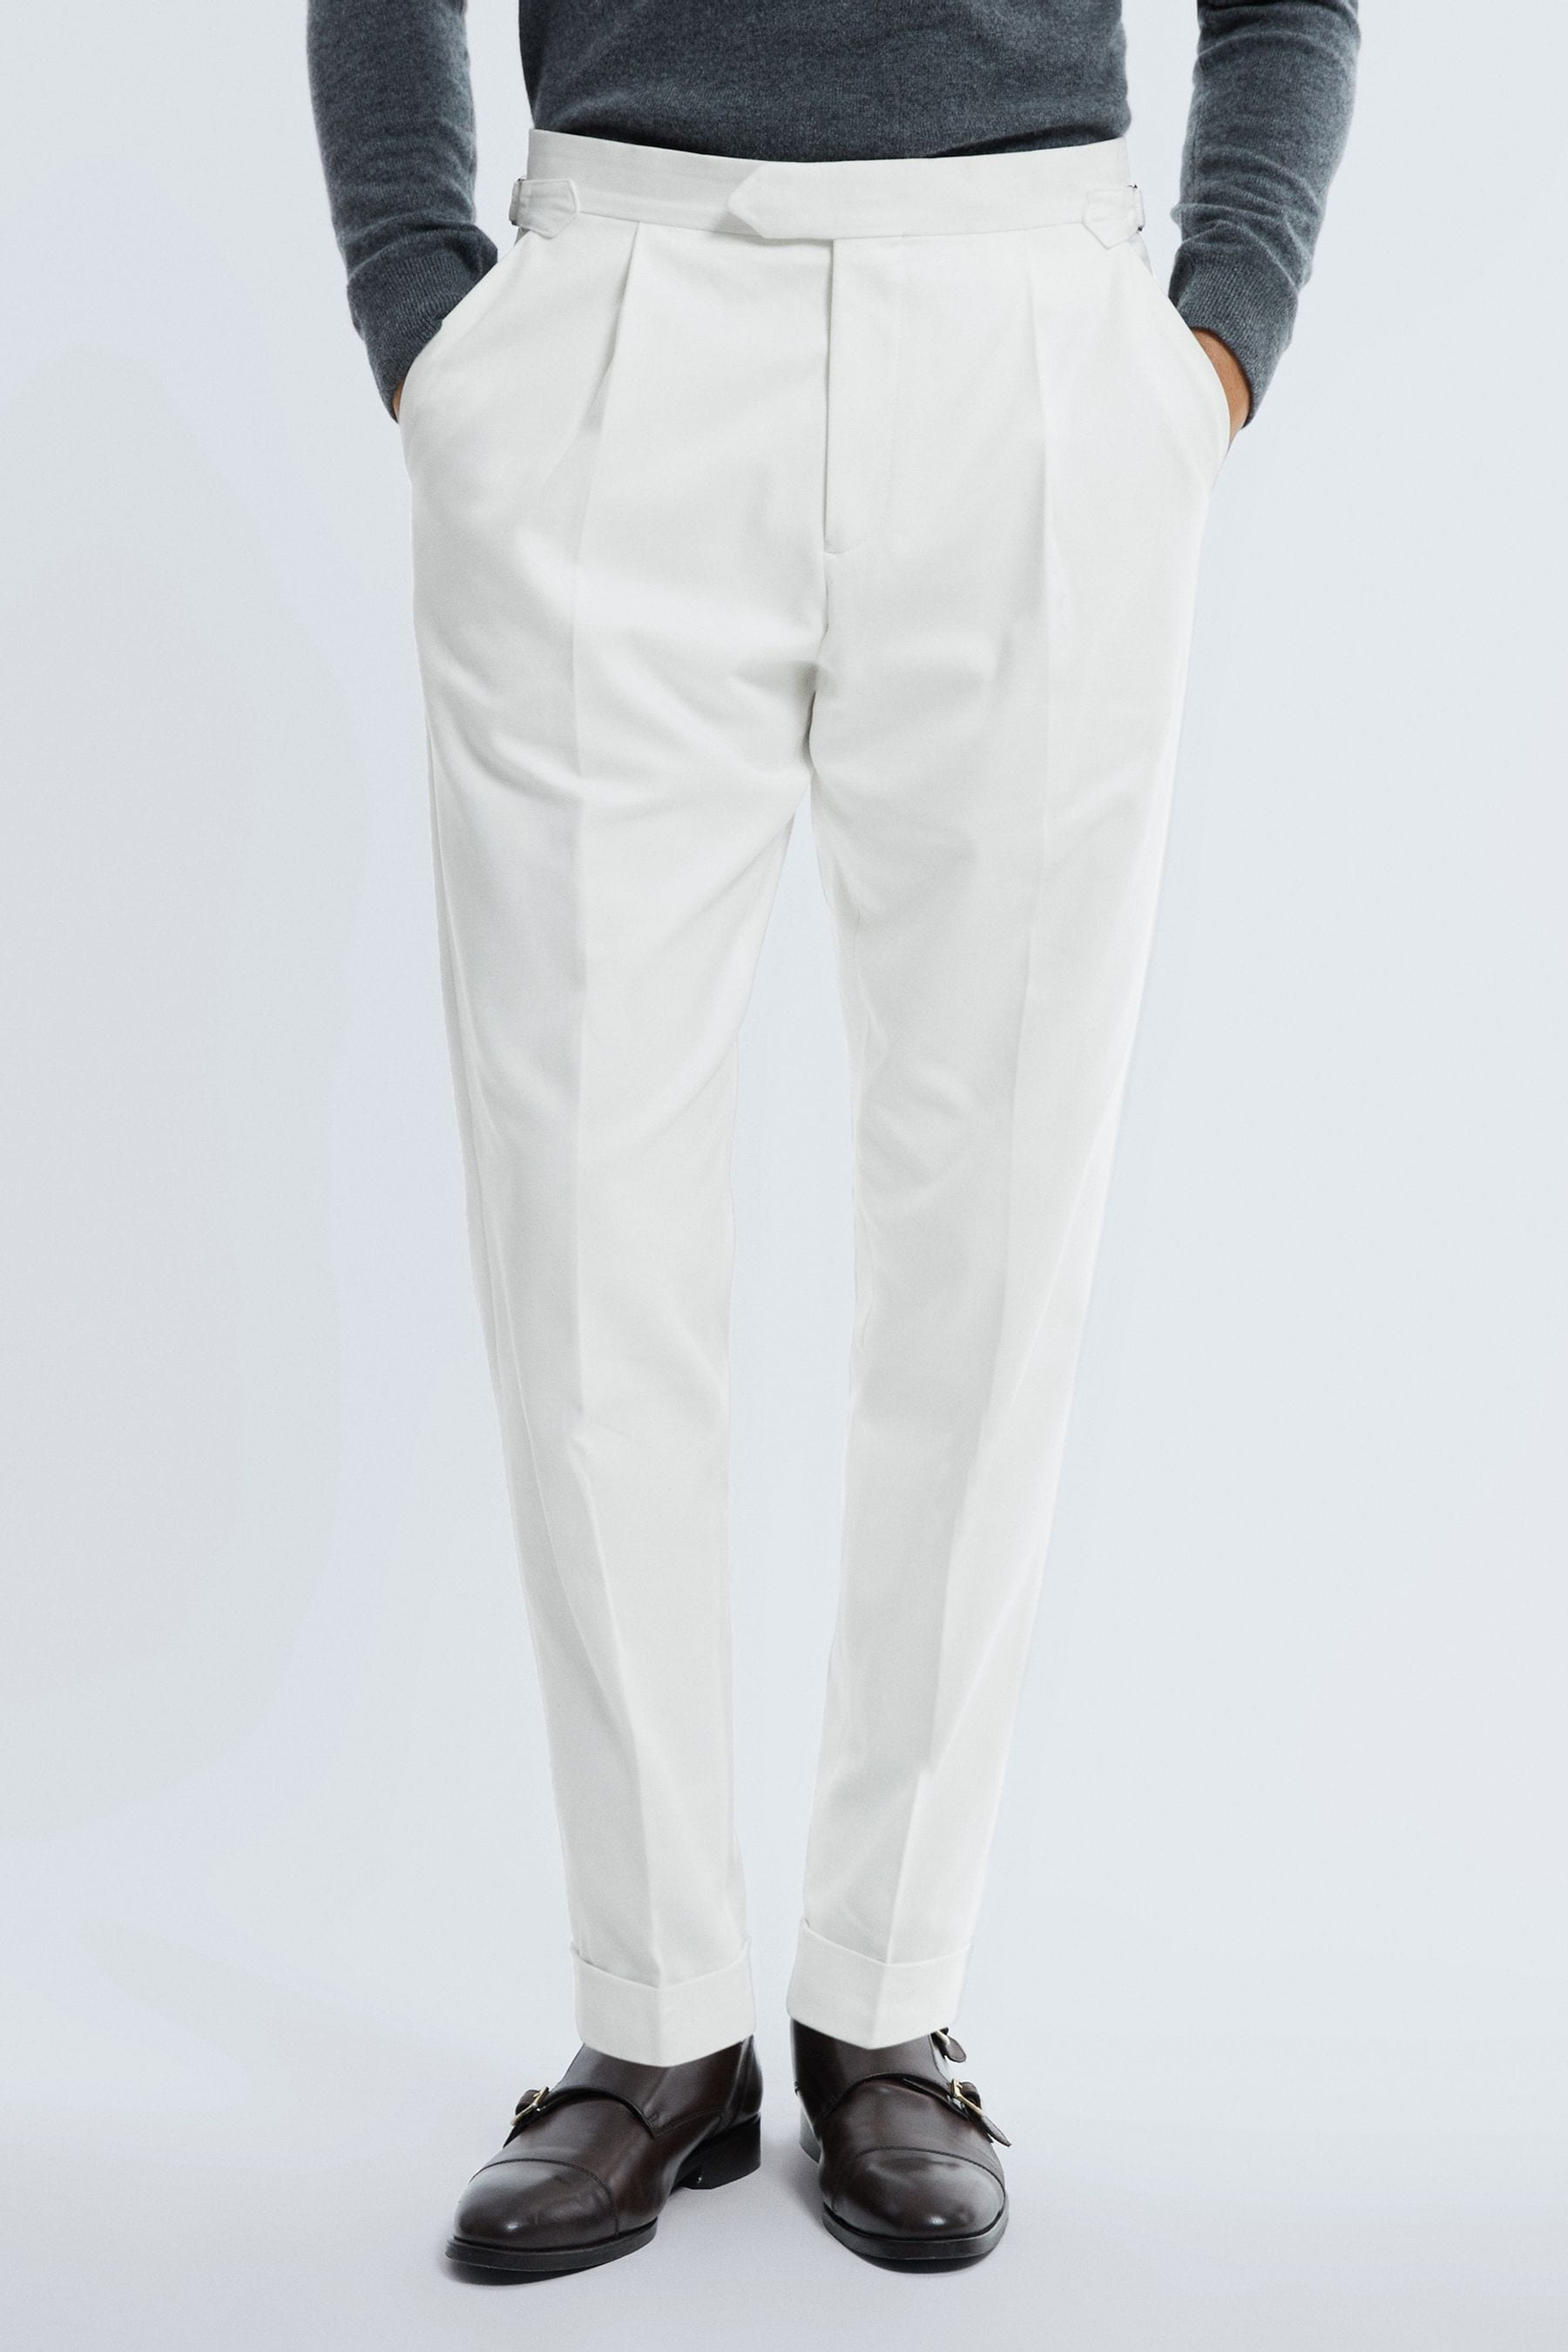 Atelier Sea Island Cotton Slim Fit Trousers In White